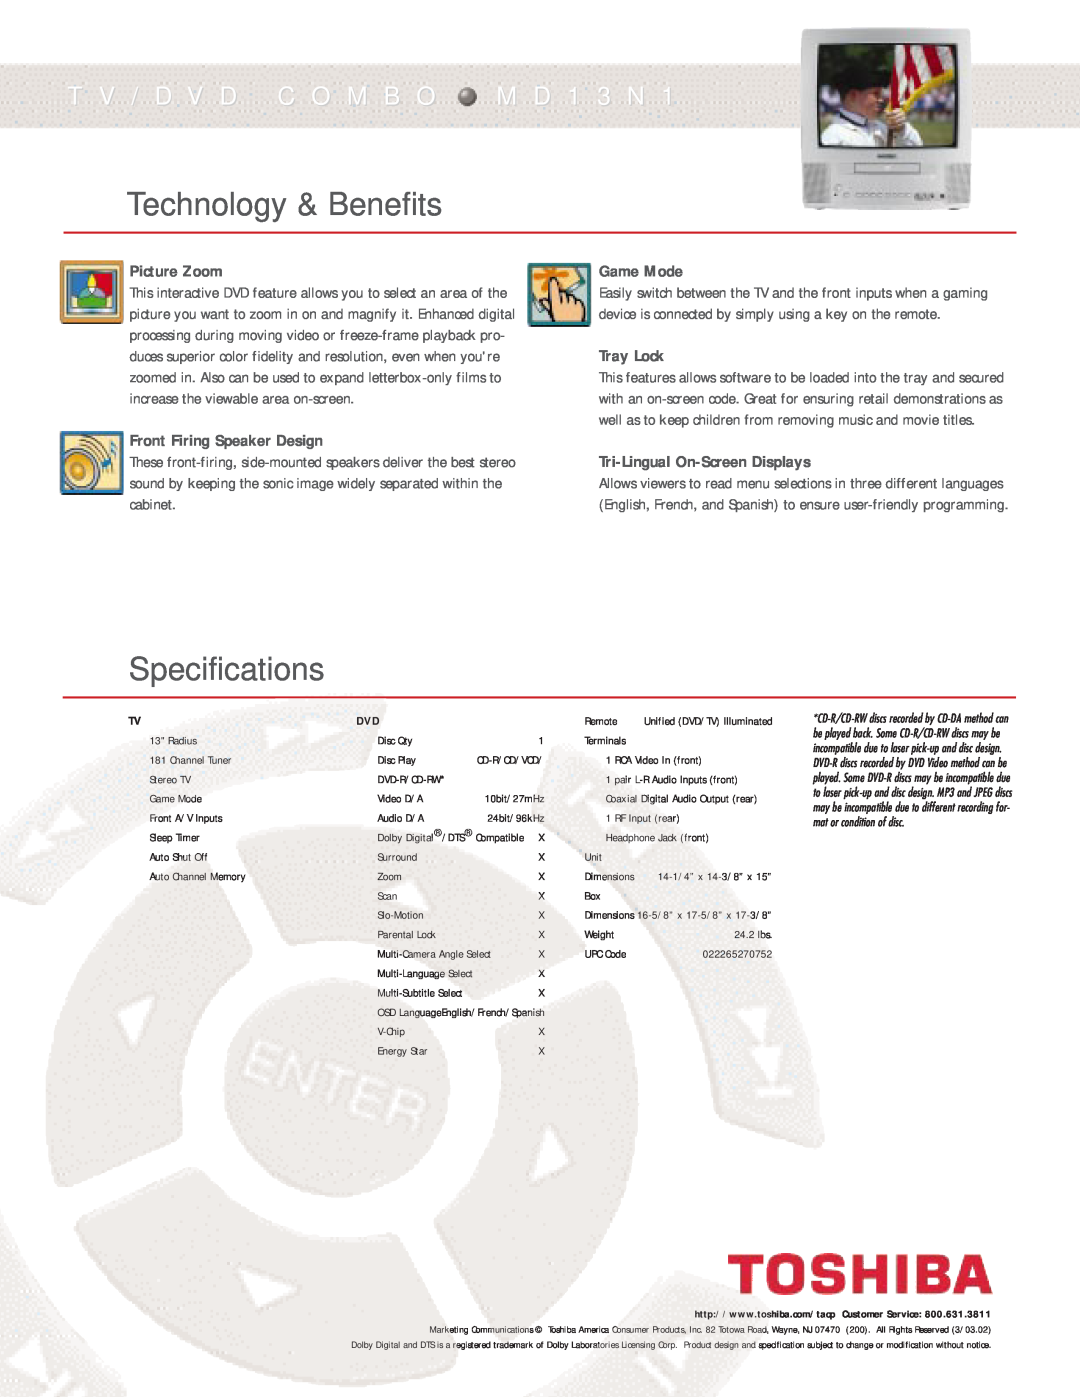 Toshiba MD13N1 Technology & Benefits, Specifications, T V / D V D C O M B O M D 1 3 N, Picture Zoom, Game Mode, Tray Lock 